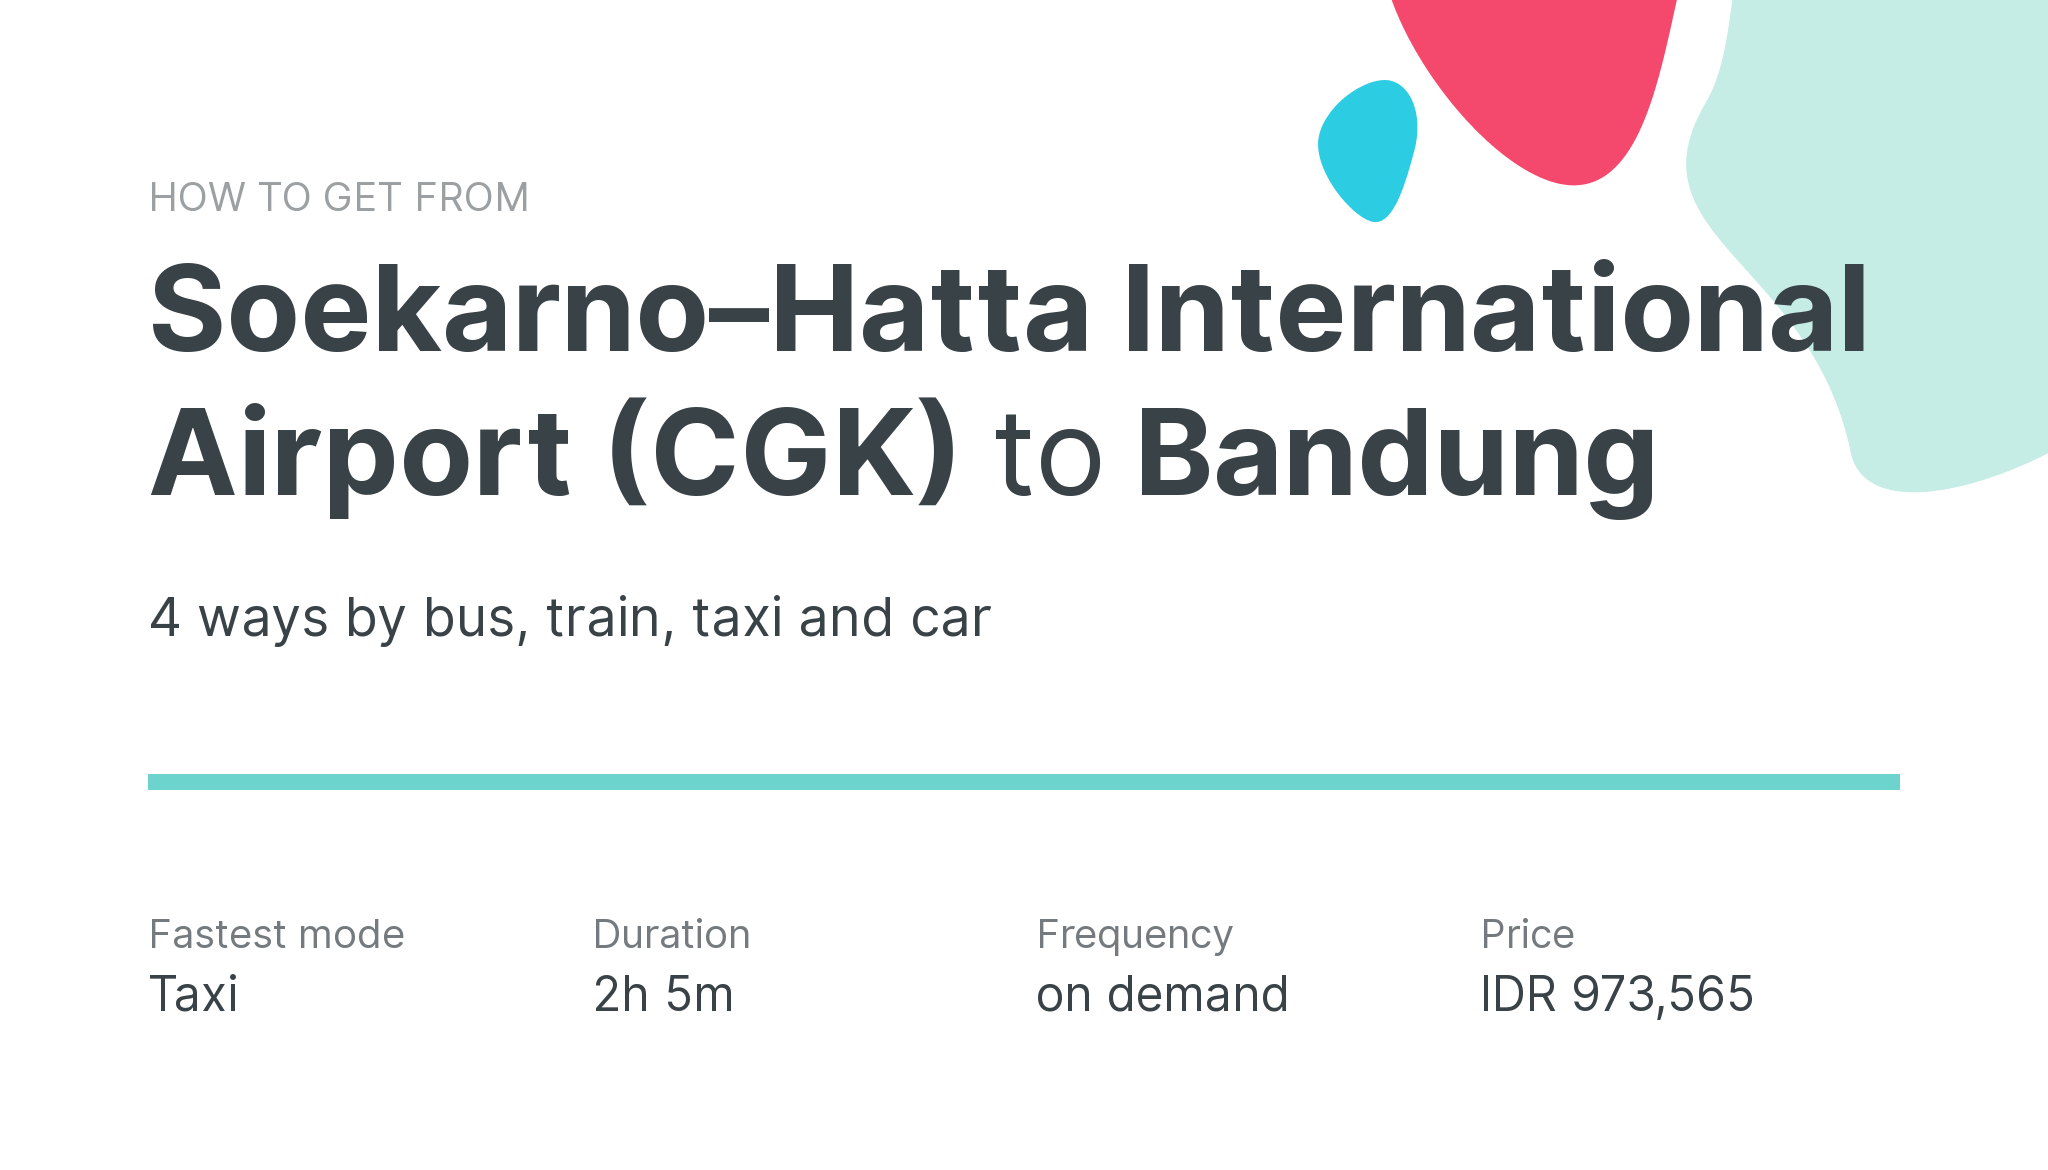 How do I get from Soekarno–Hatta International Airport (CGK) to Bandung